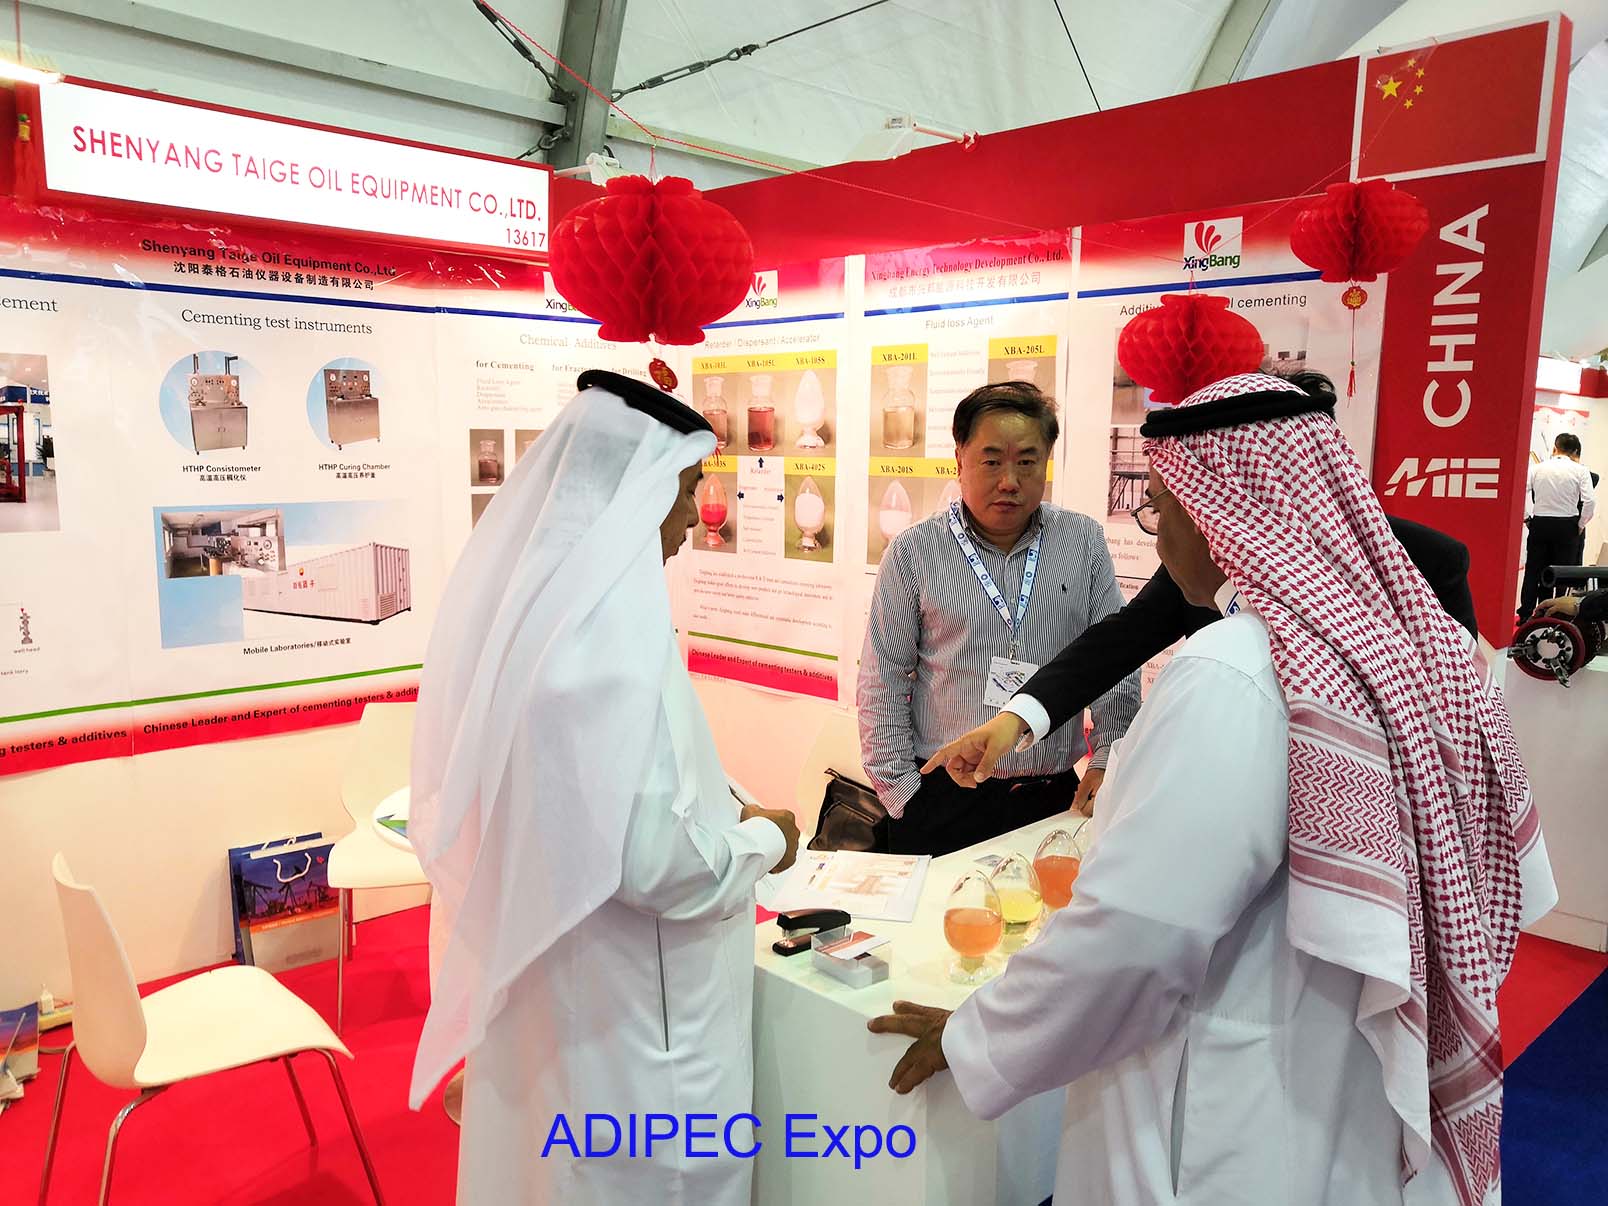 ADIPEC expo